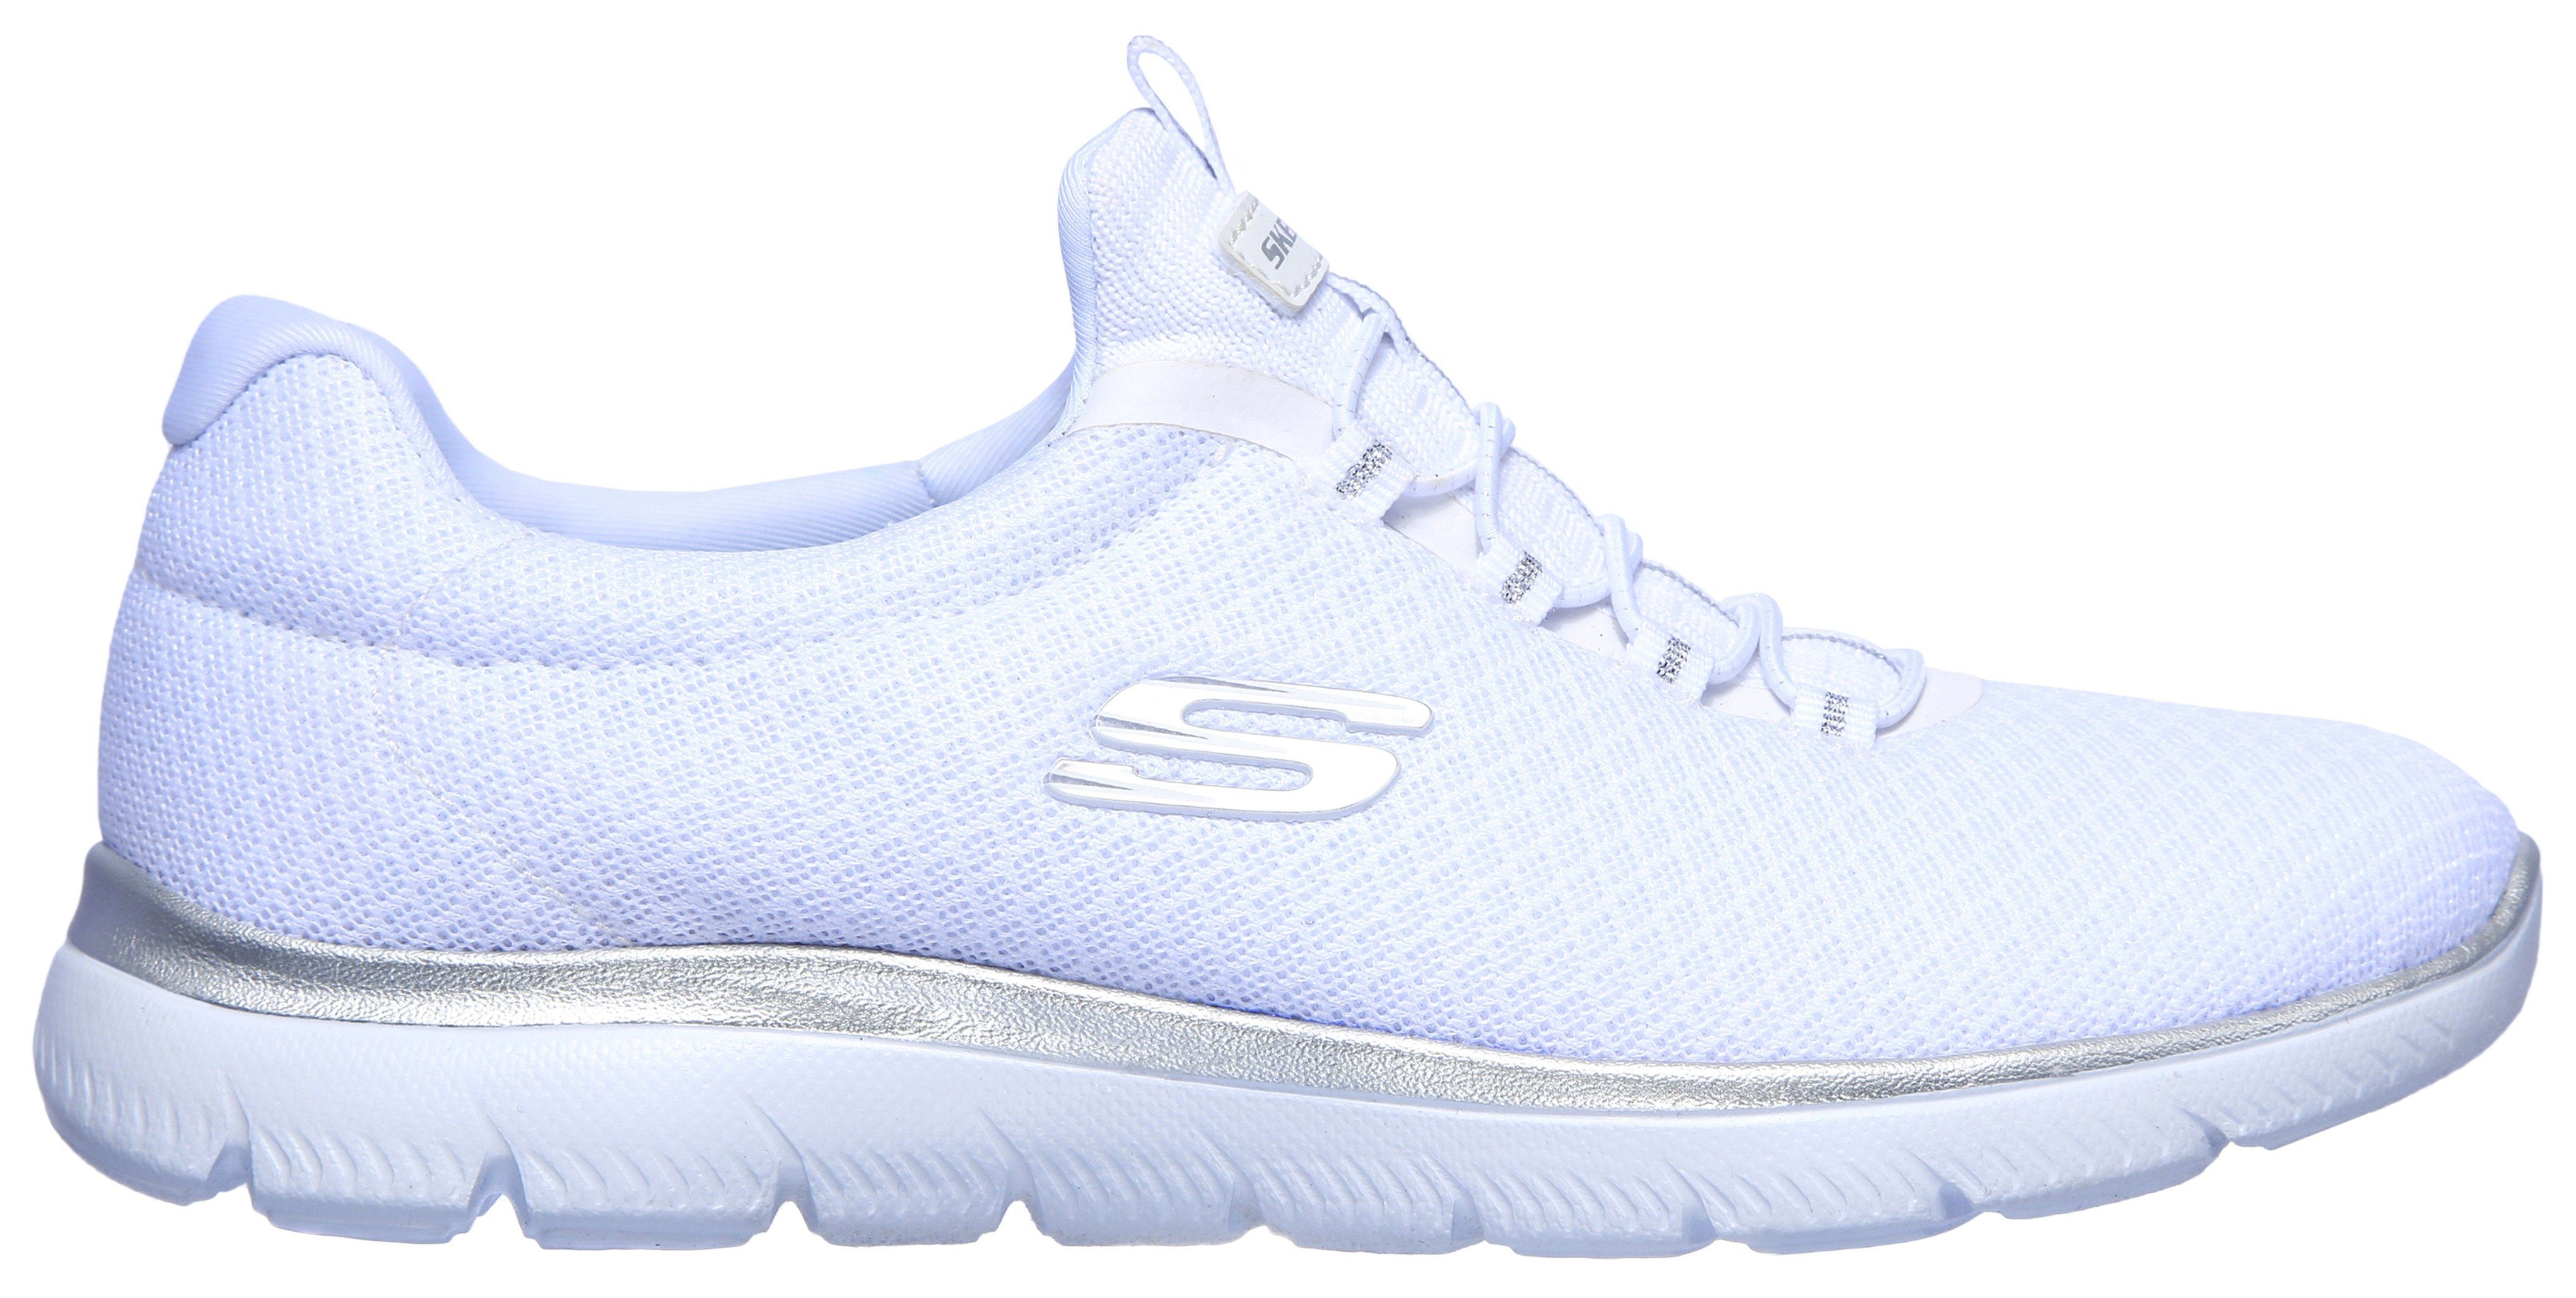 Skechers SUMMITS Slip-On mit weiß-silberfarben Kontrast-Details dezenten Sneaker